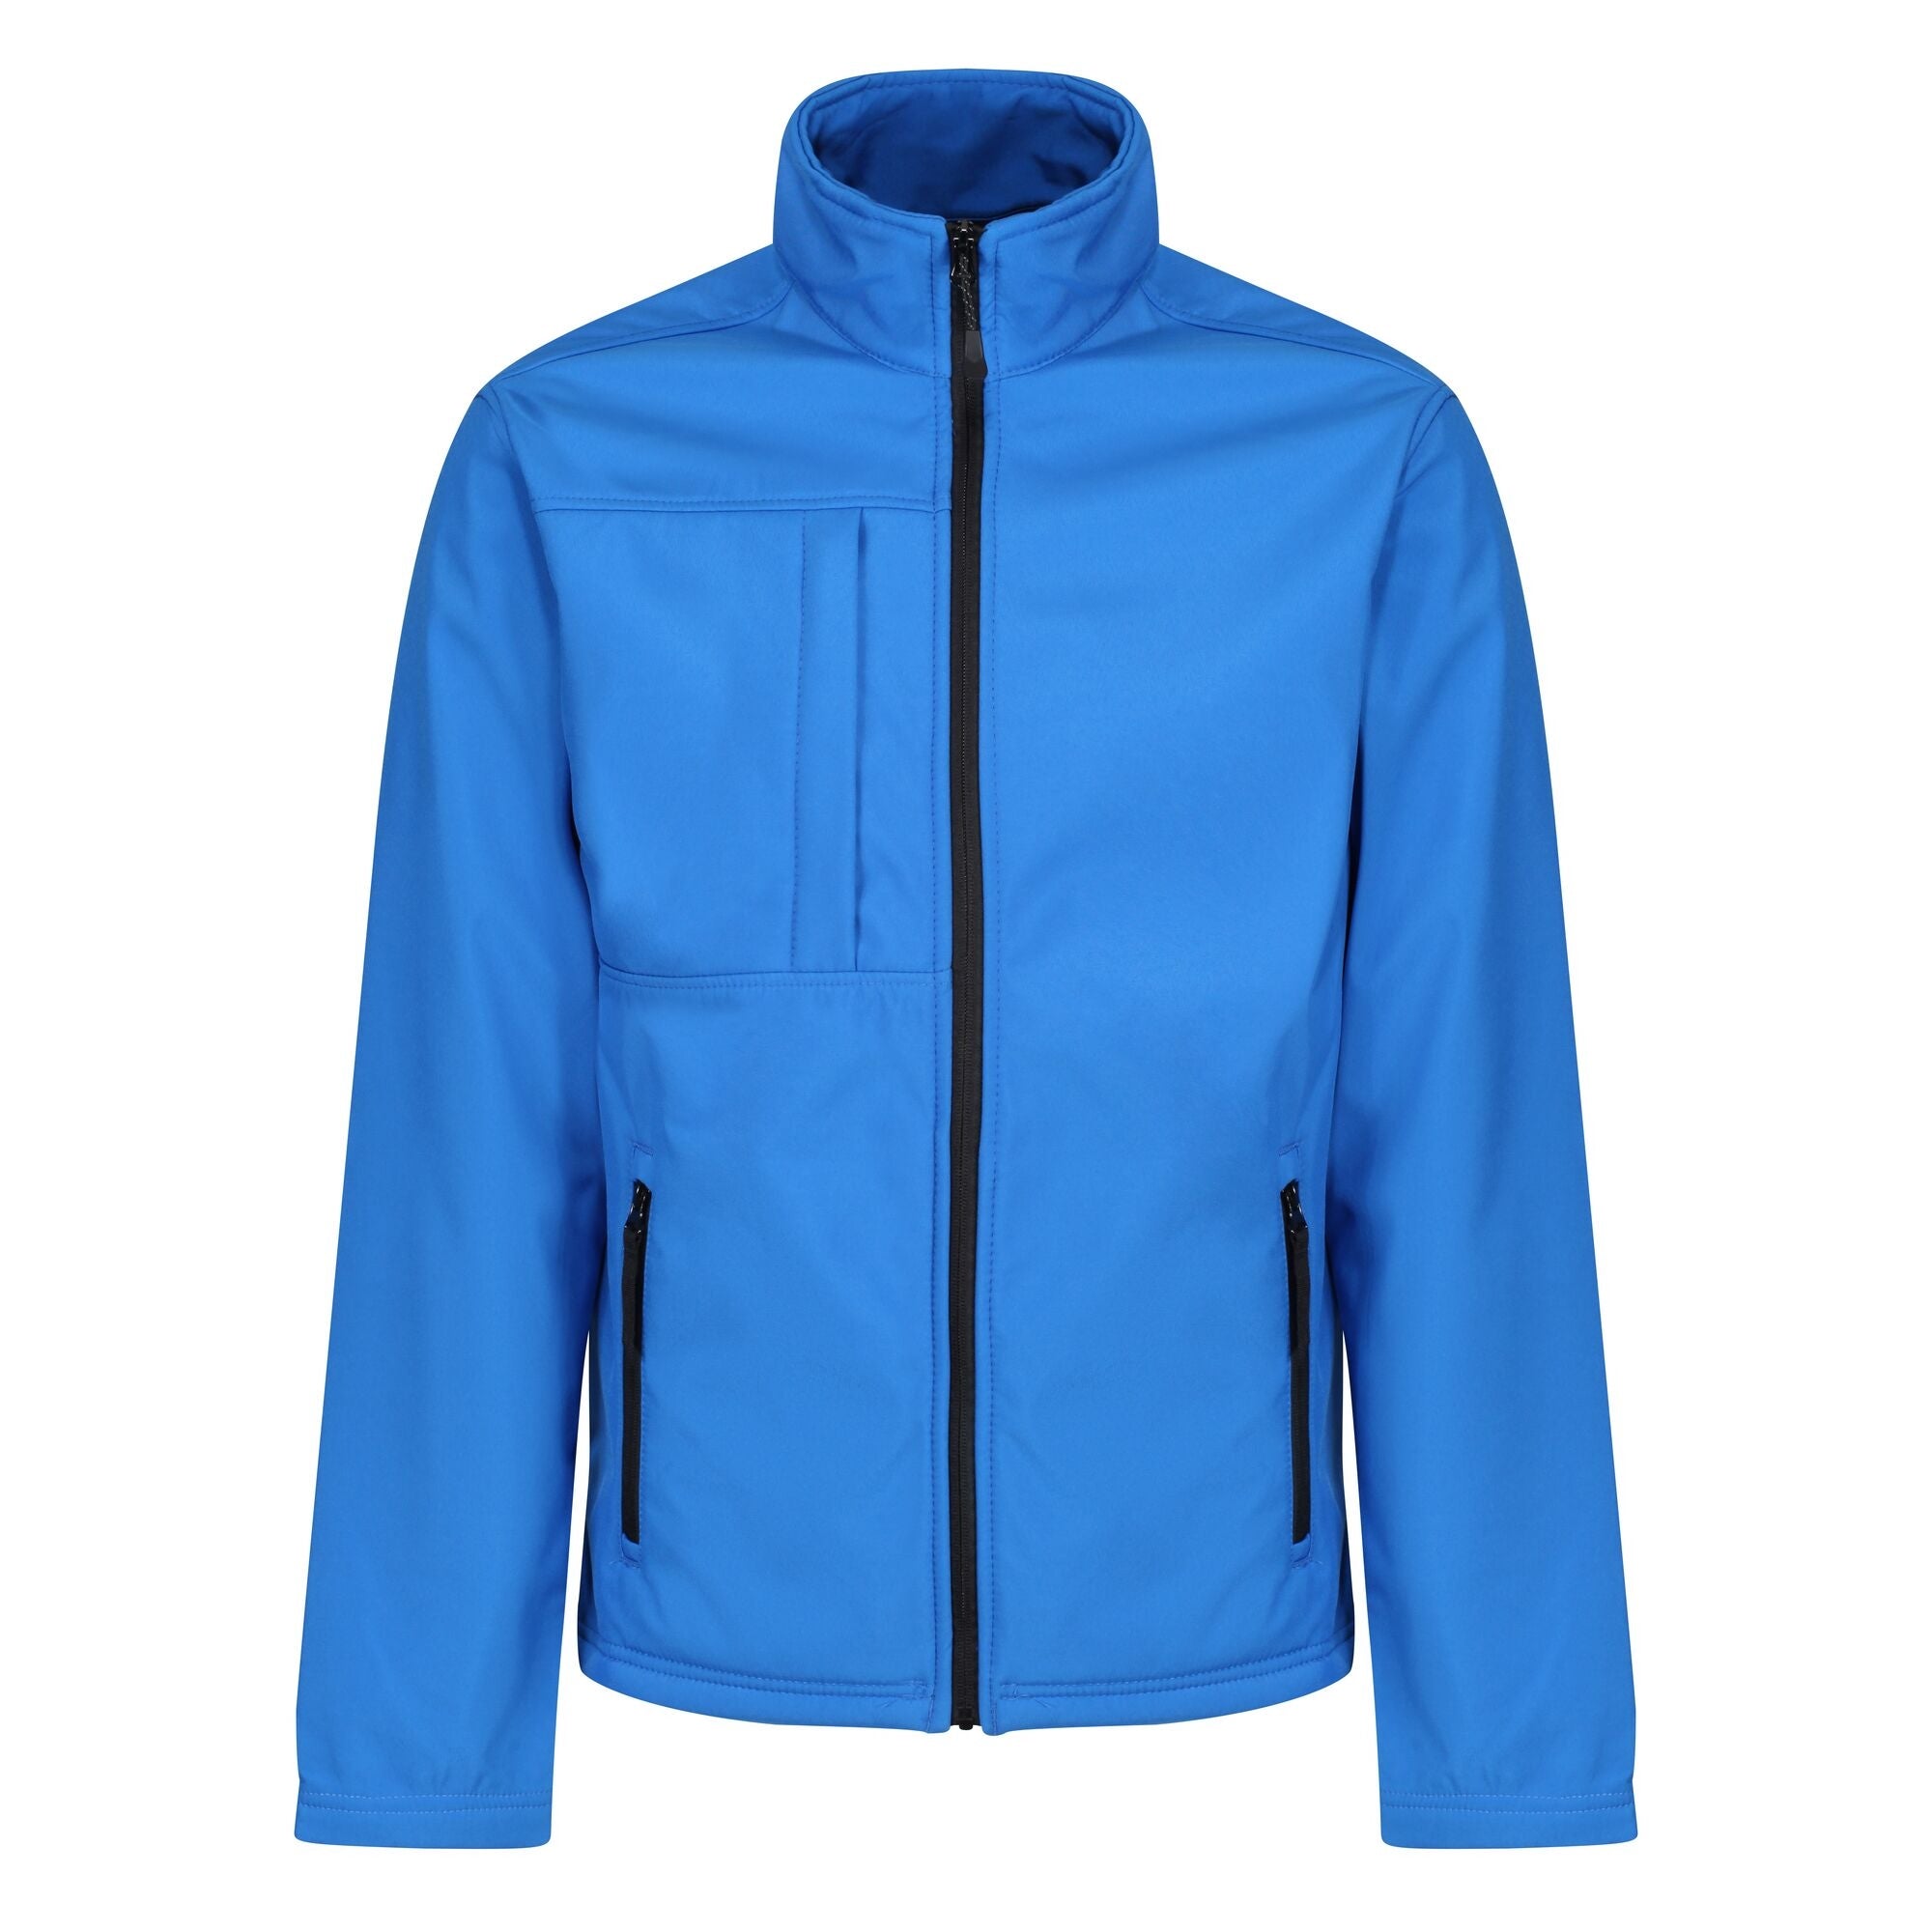 Regatta Octagon 3 Layer Softshell Jacket - Oxford Blue/Black